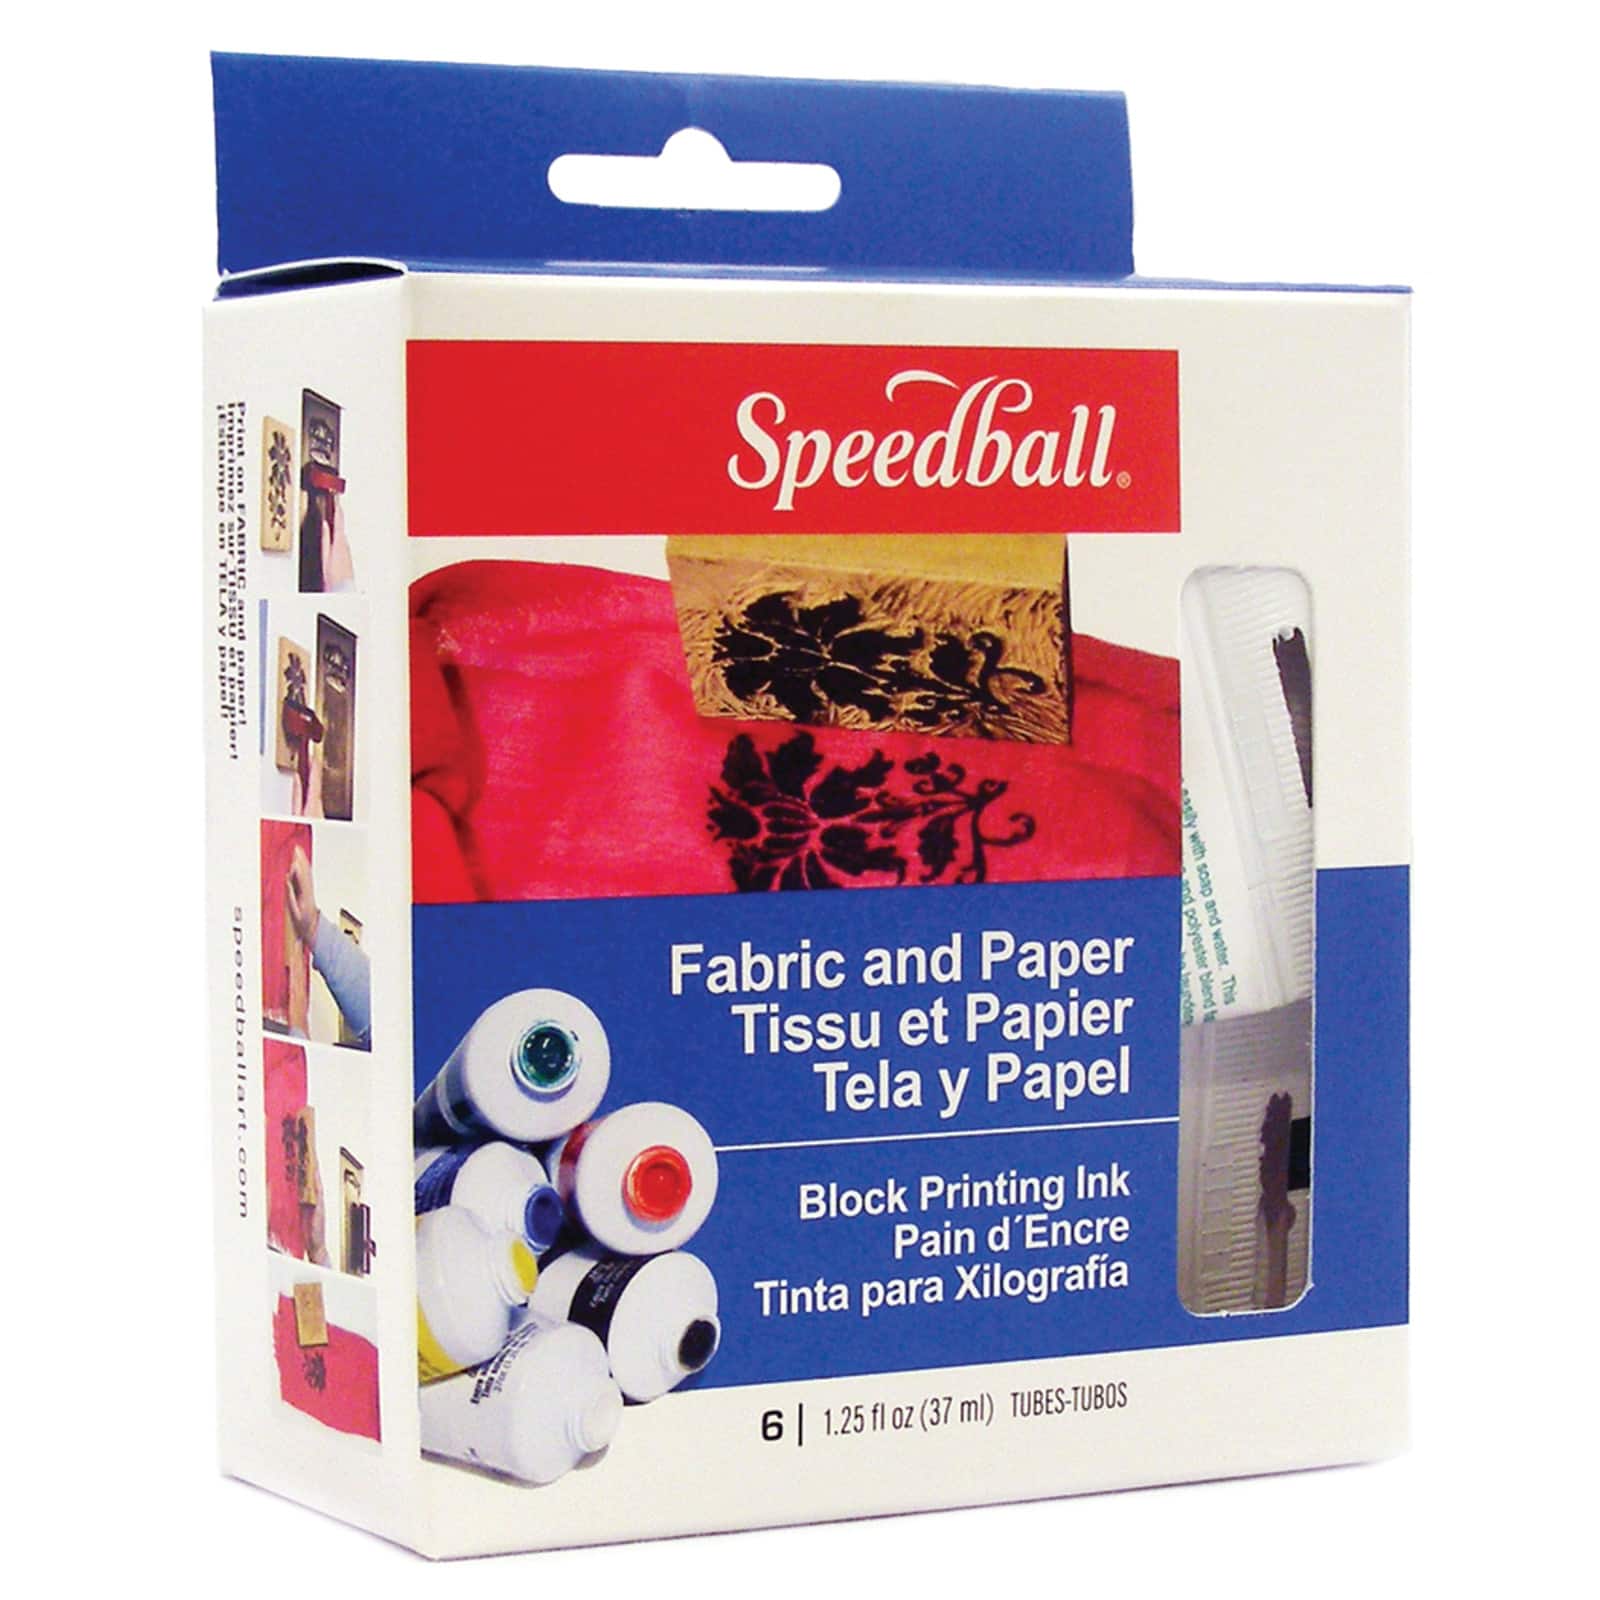 Speedball Block Printing Kit, Fabric